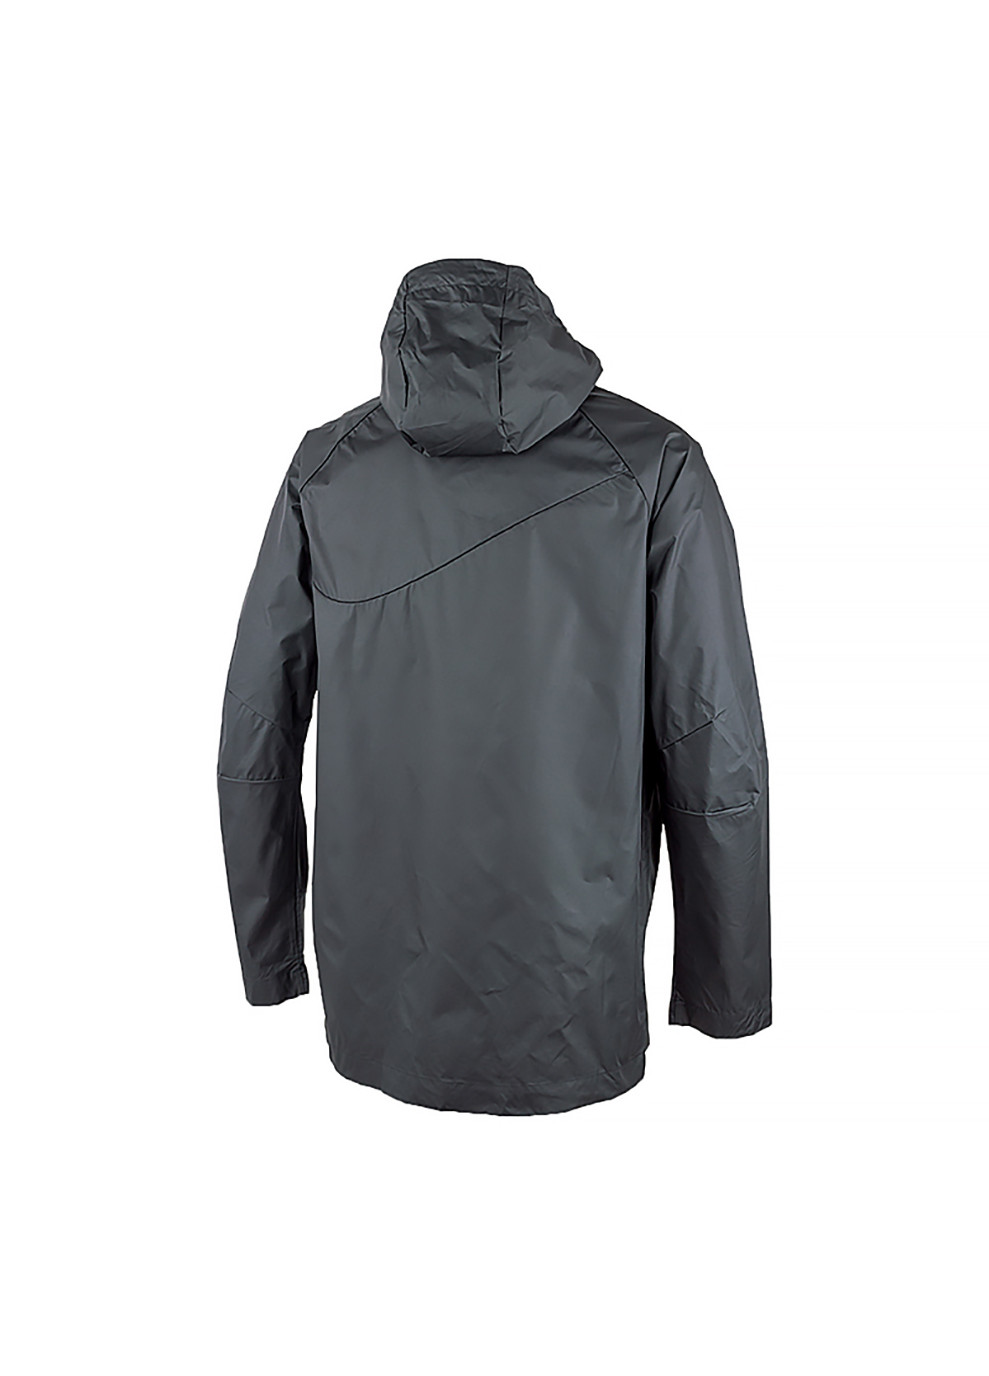 Черная демисезонная мужская куртка m nk sf acdpr hd rain jkt черный s (dj6301-010 s) Nike